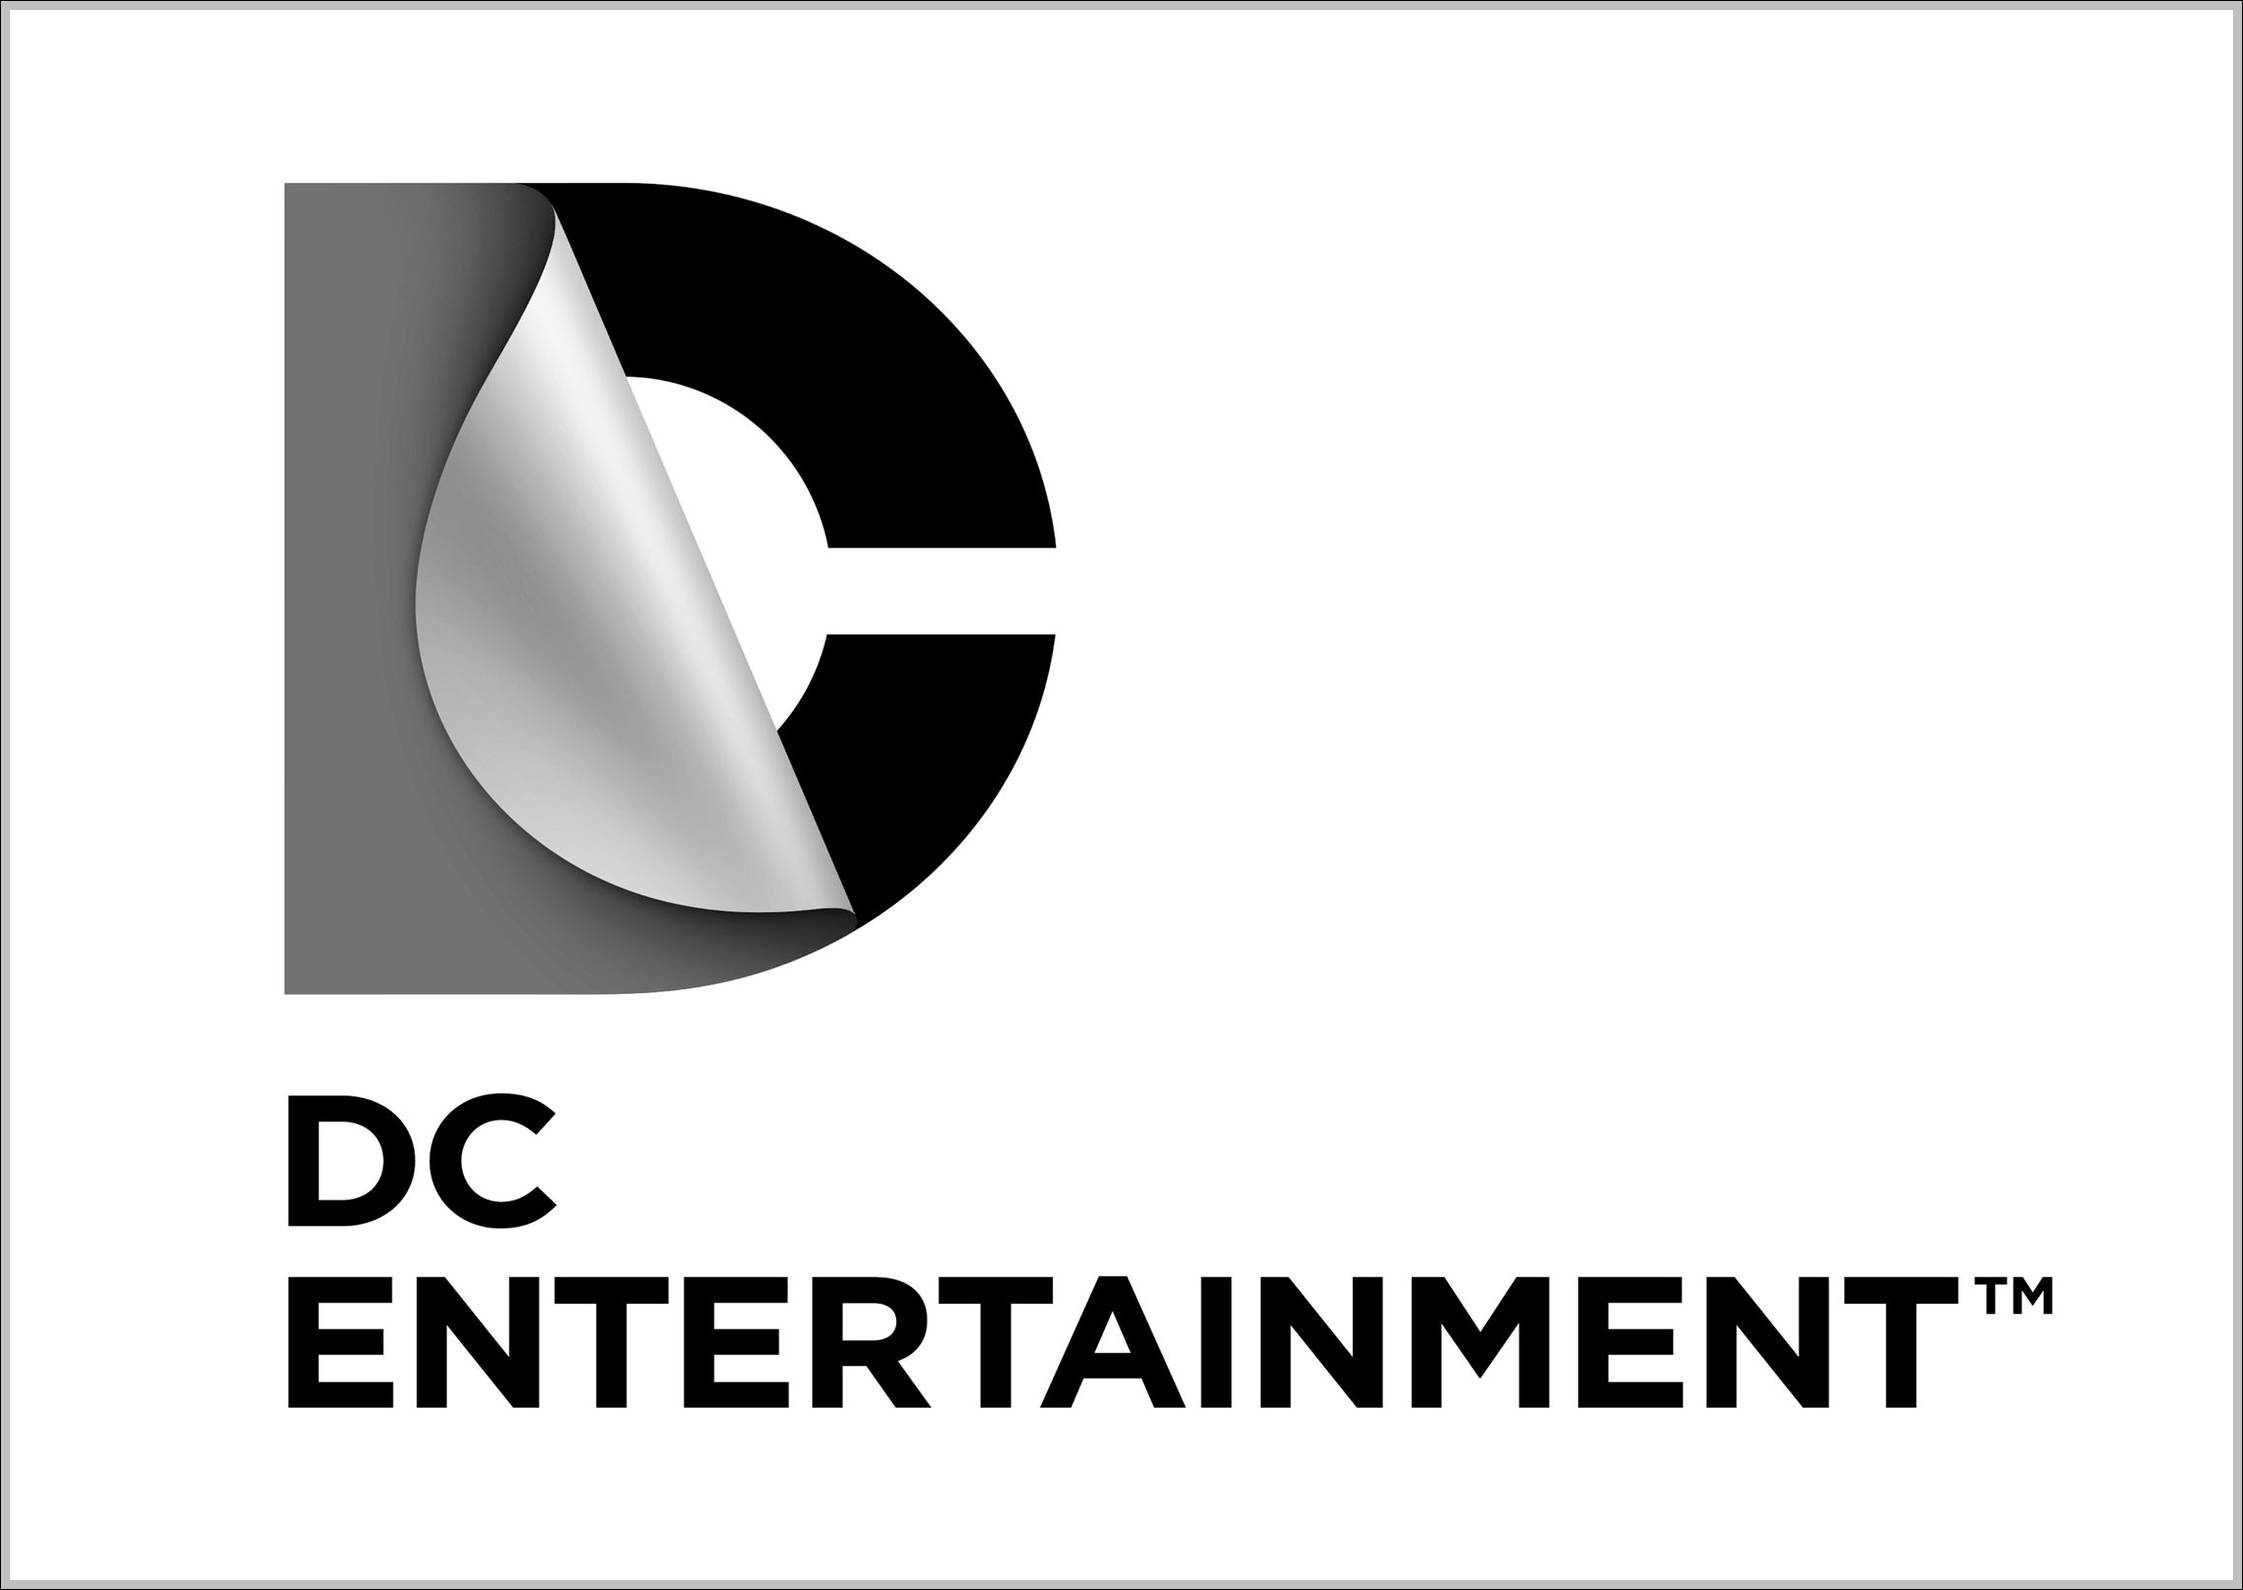 DC Entertainment logo